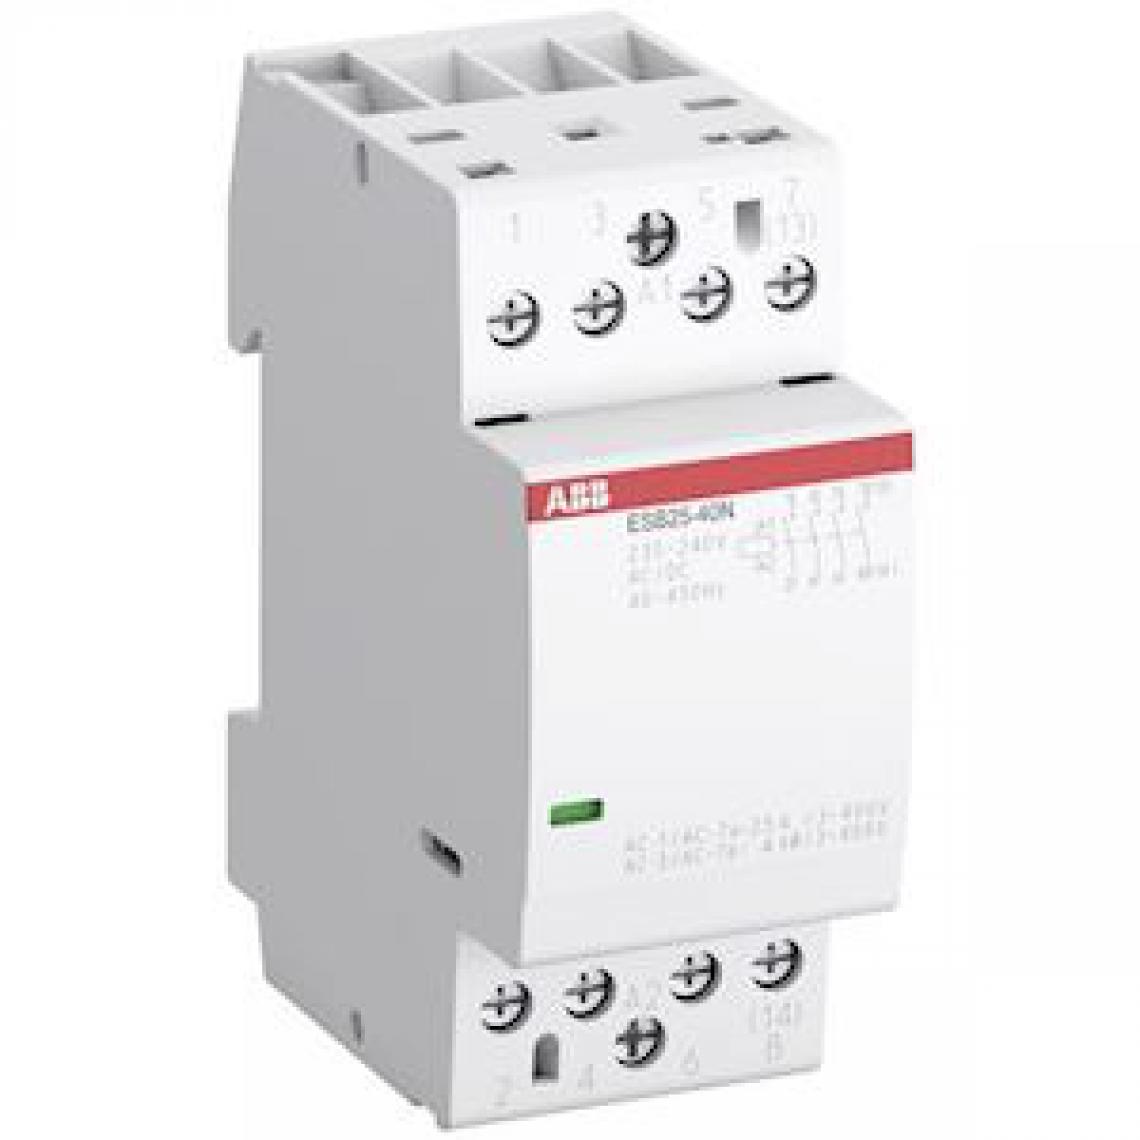 Abb - contacteur modulaire - abb esbn - 25a - 4 contacts no - 230 volts - abb 1sae231111r0640 - Télérupteurs, minuteries et horloges